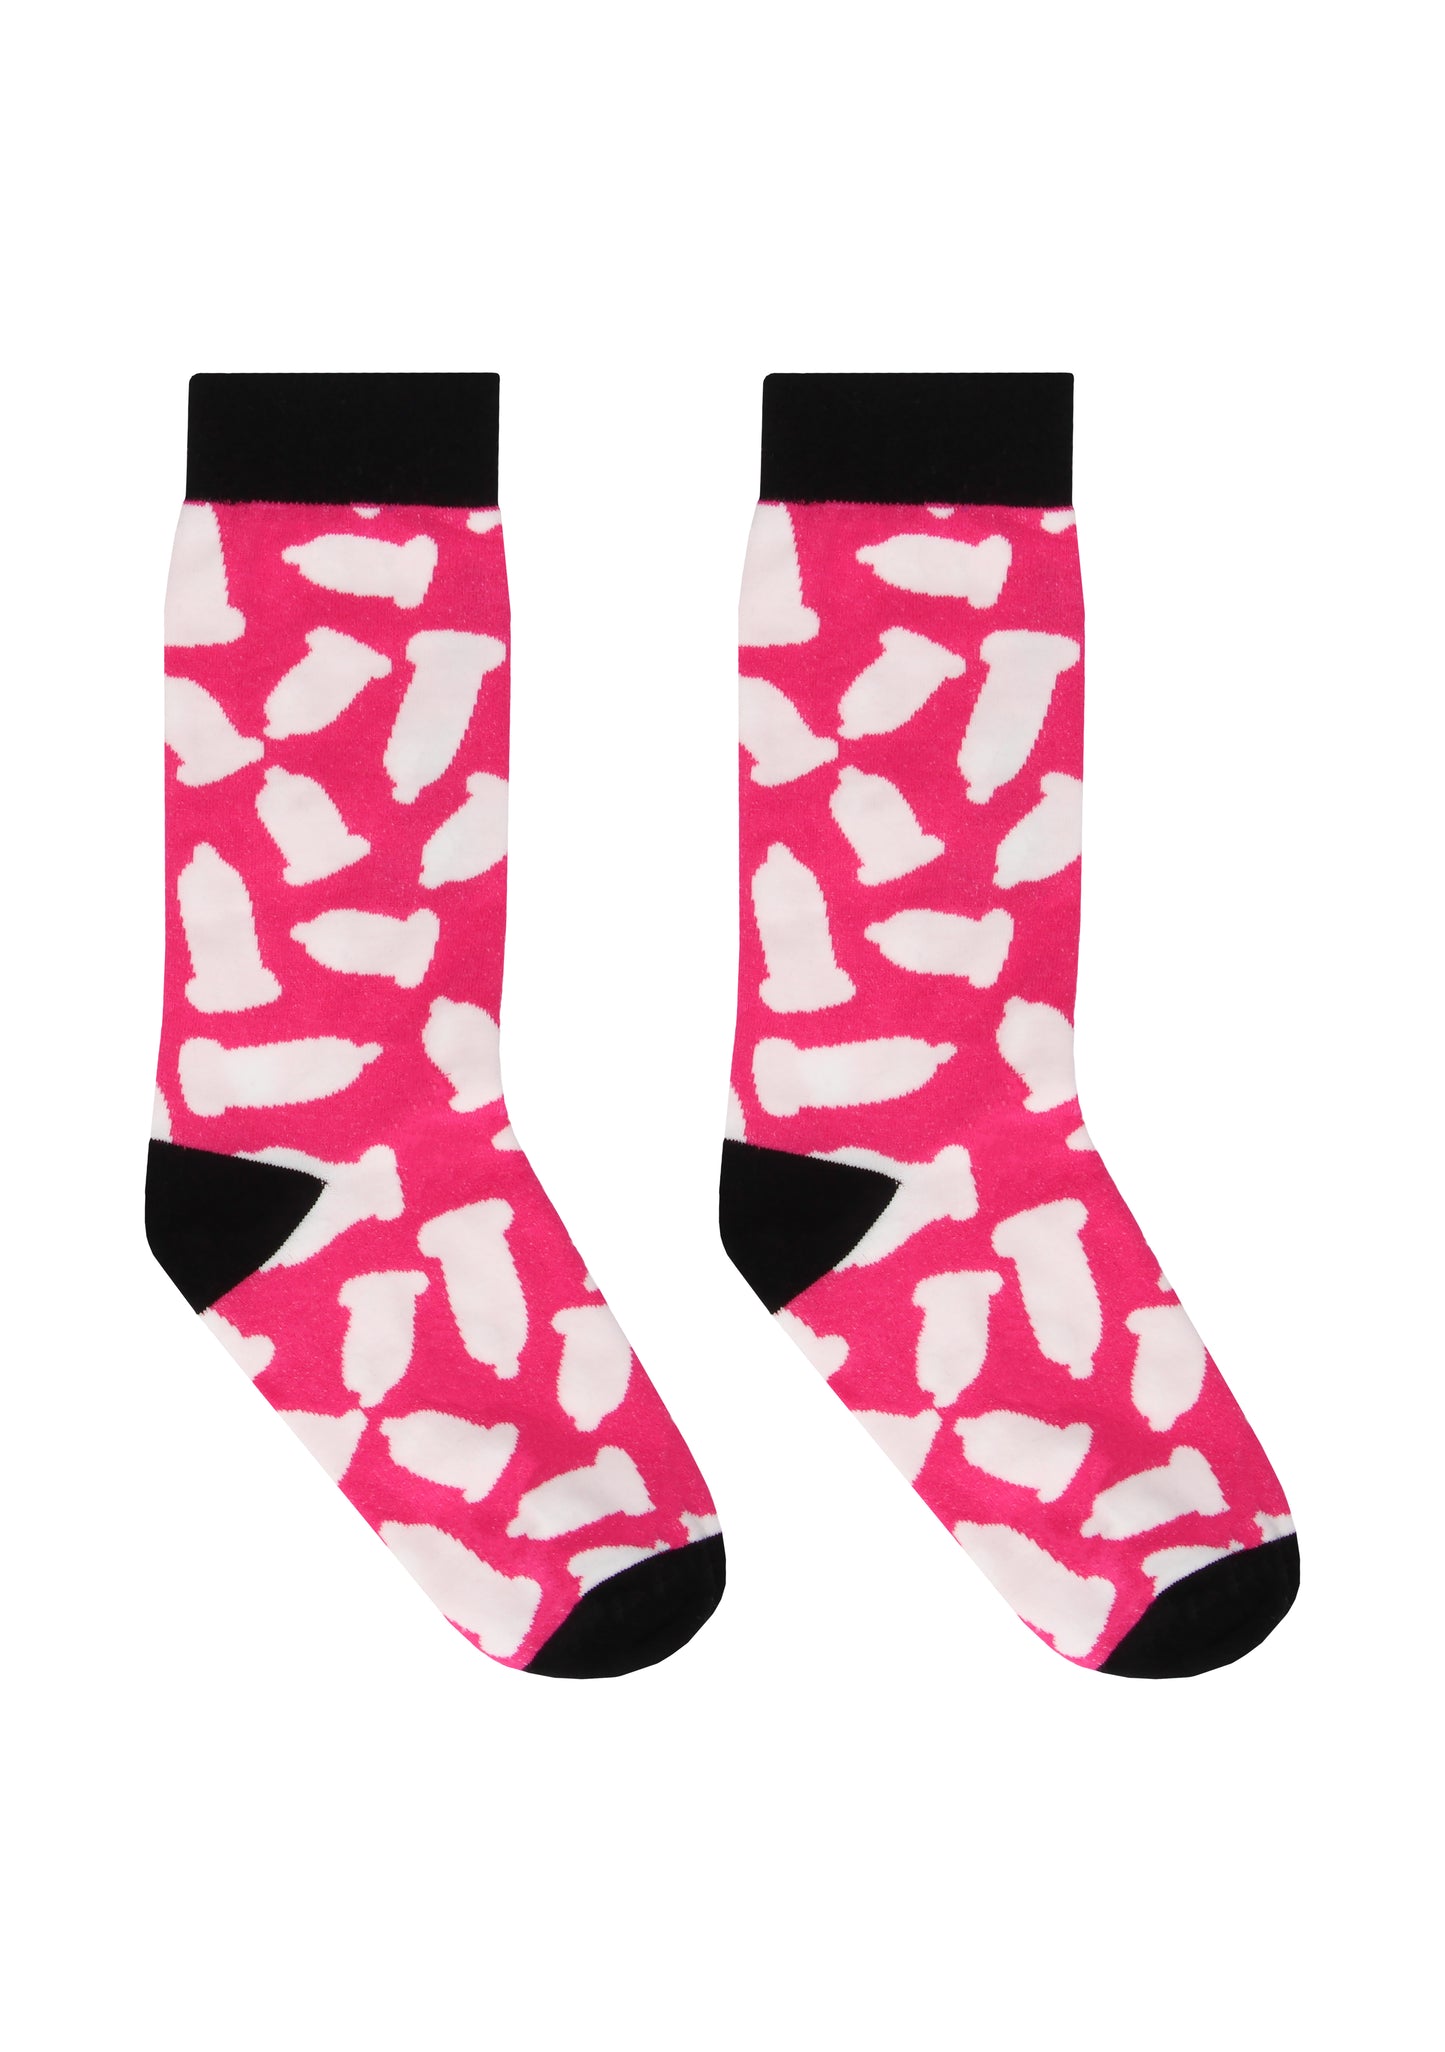 Sexy Socks - Safety First Sokken